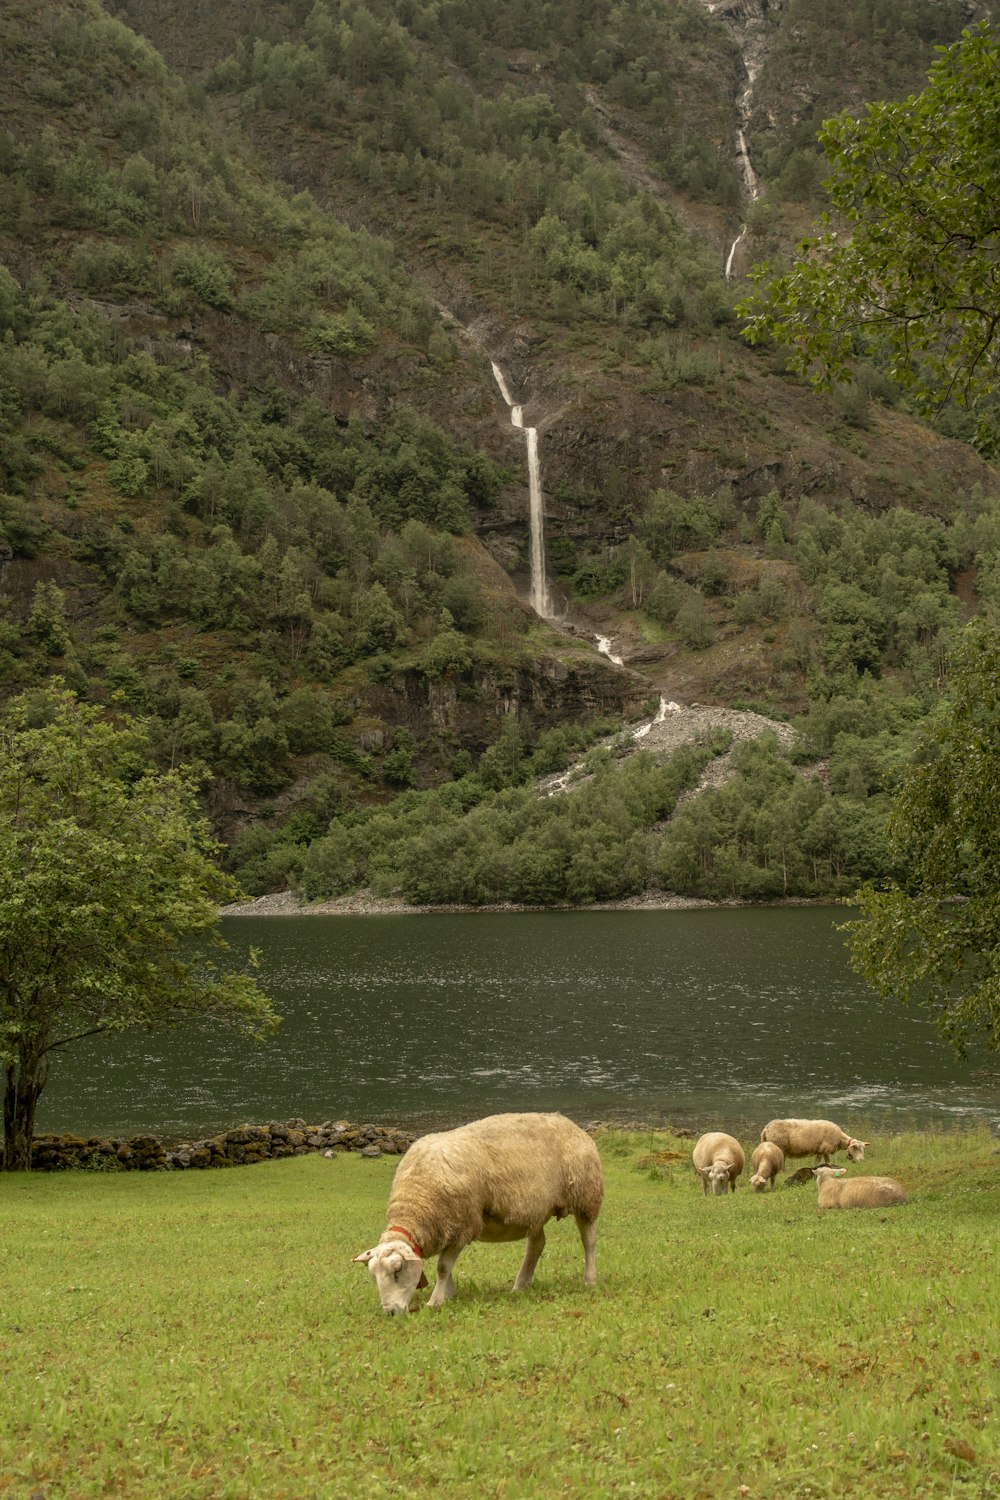 sheep grazing near a river